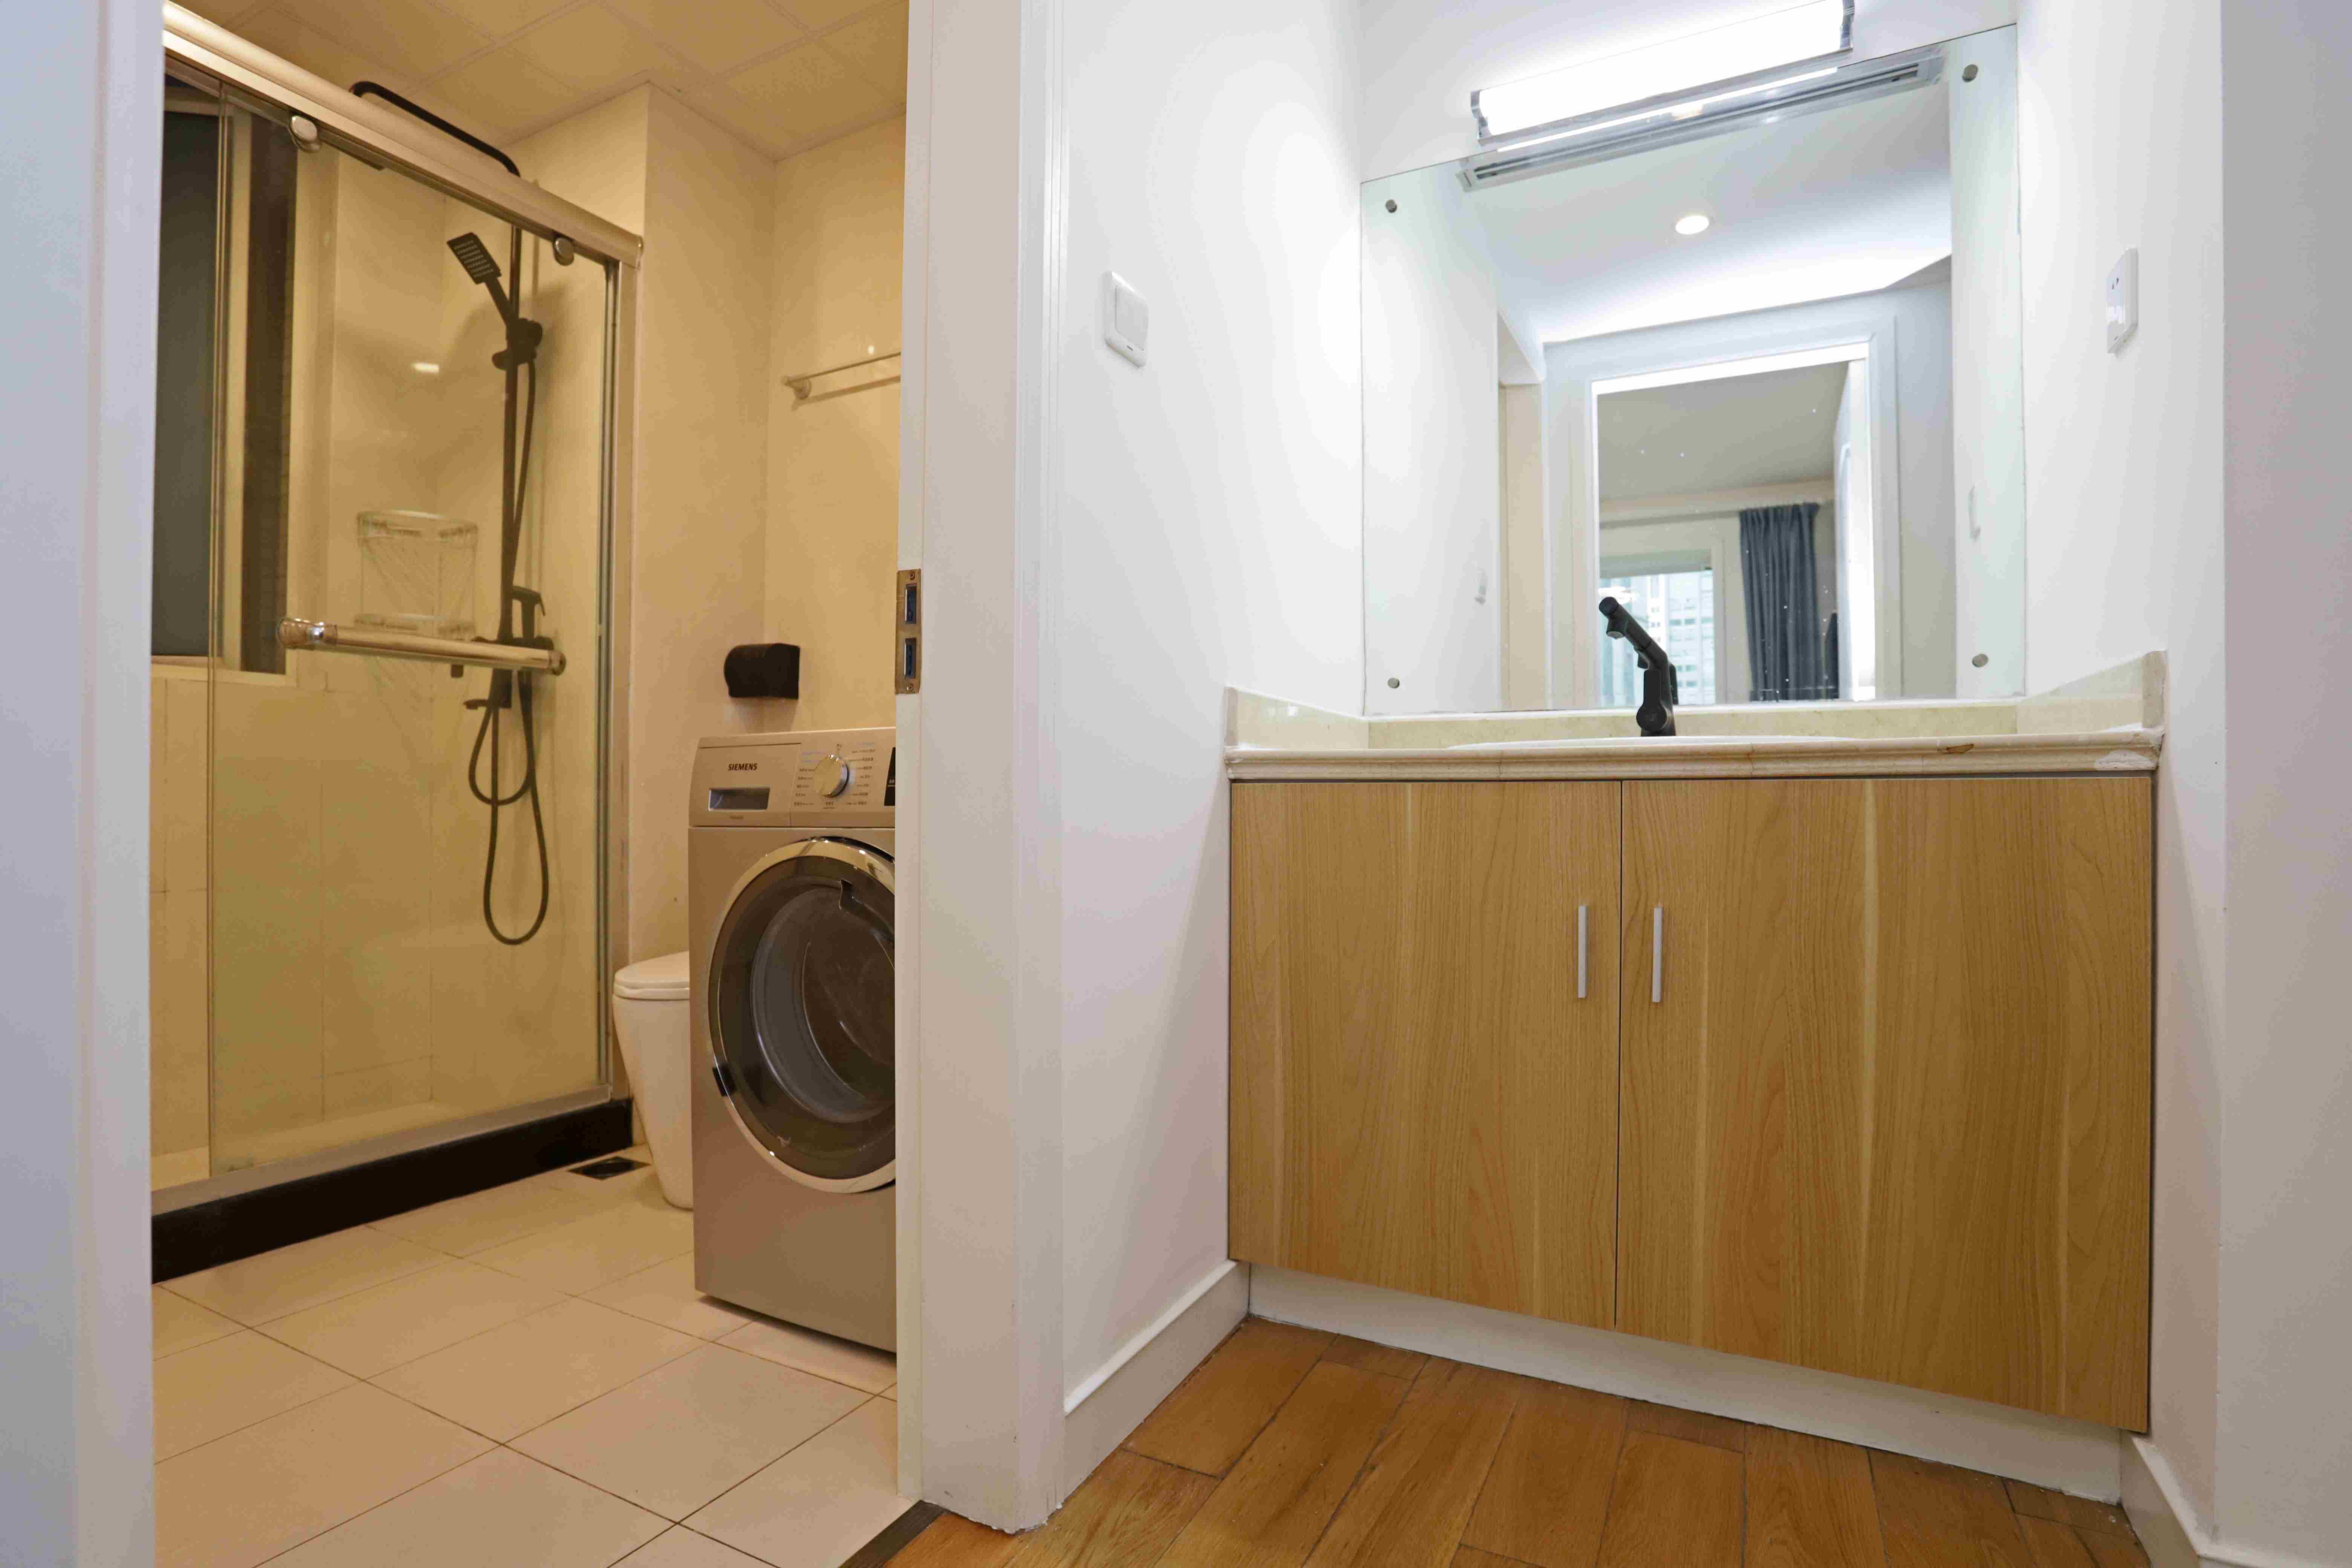 Clean Bathroom Modern Cozy Spacious Top-end Ladoll 1BR Apt for Rent in Shanghai